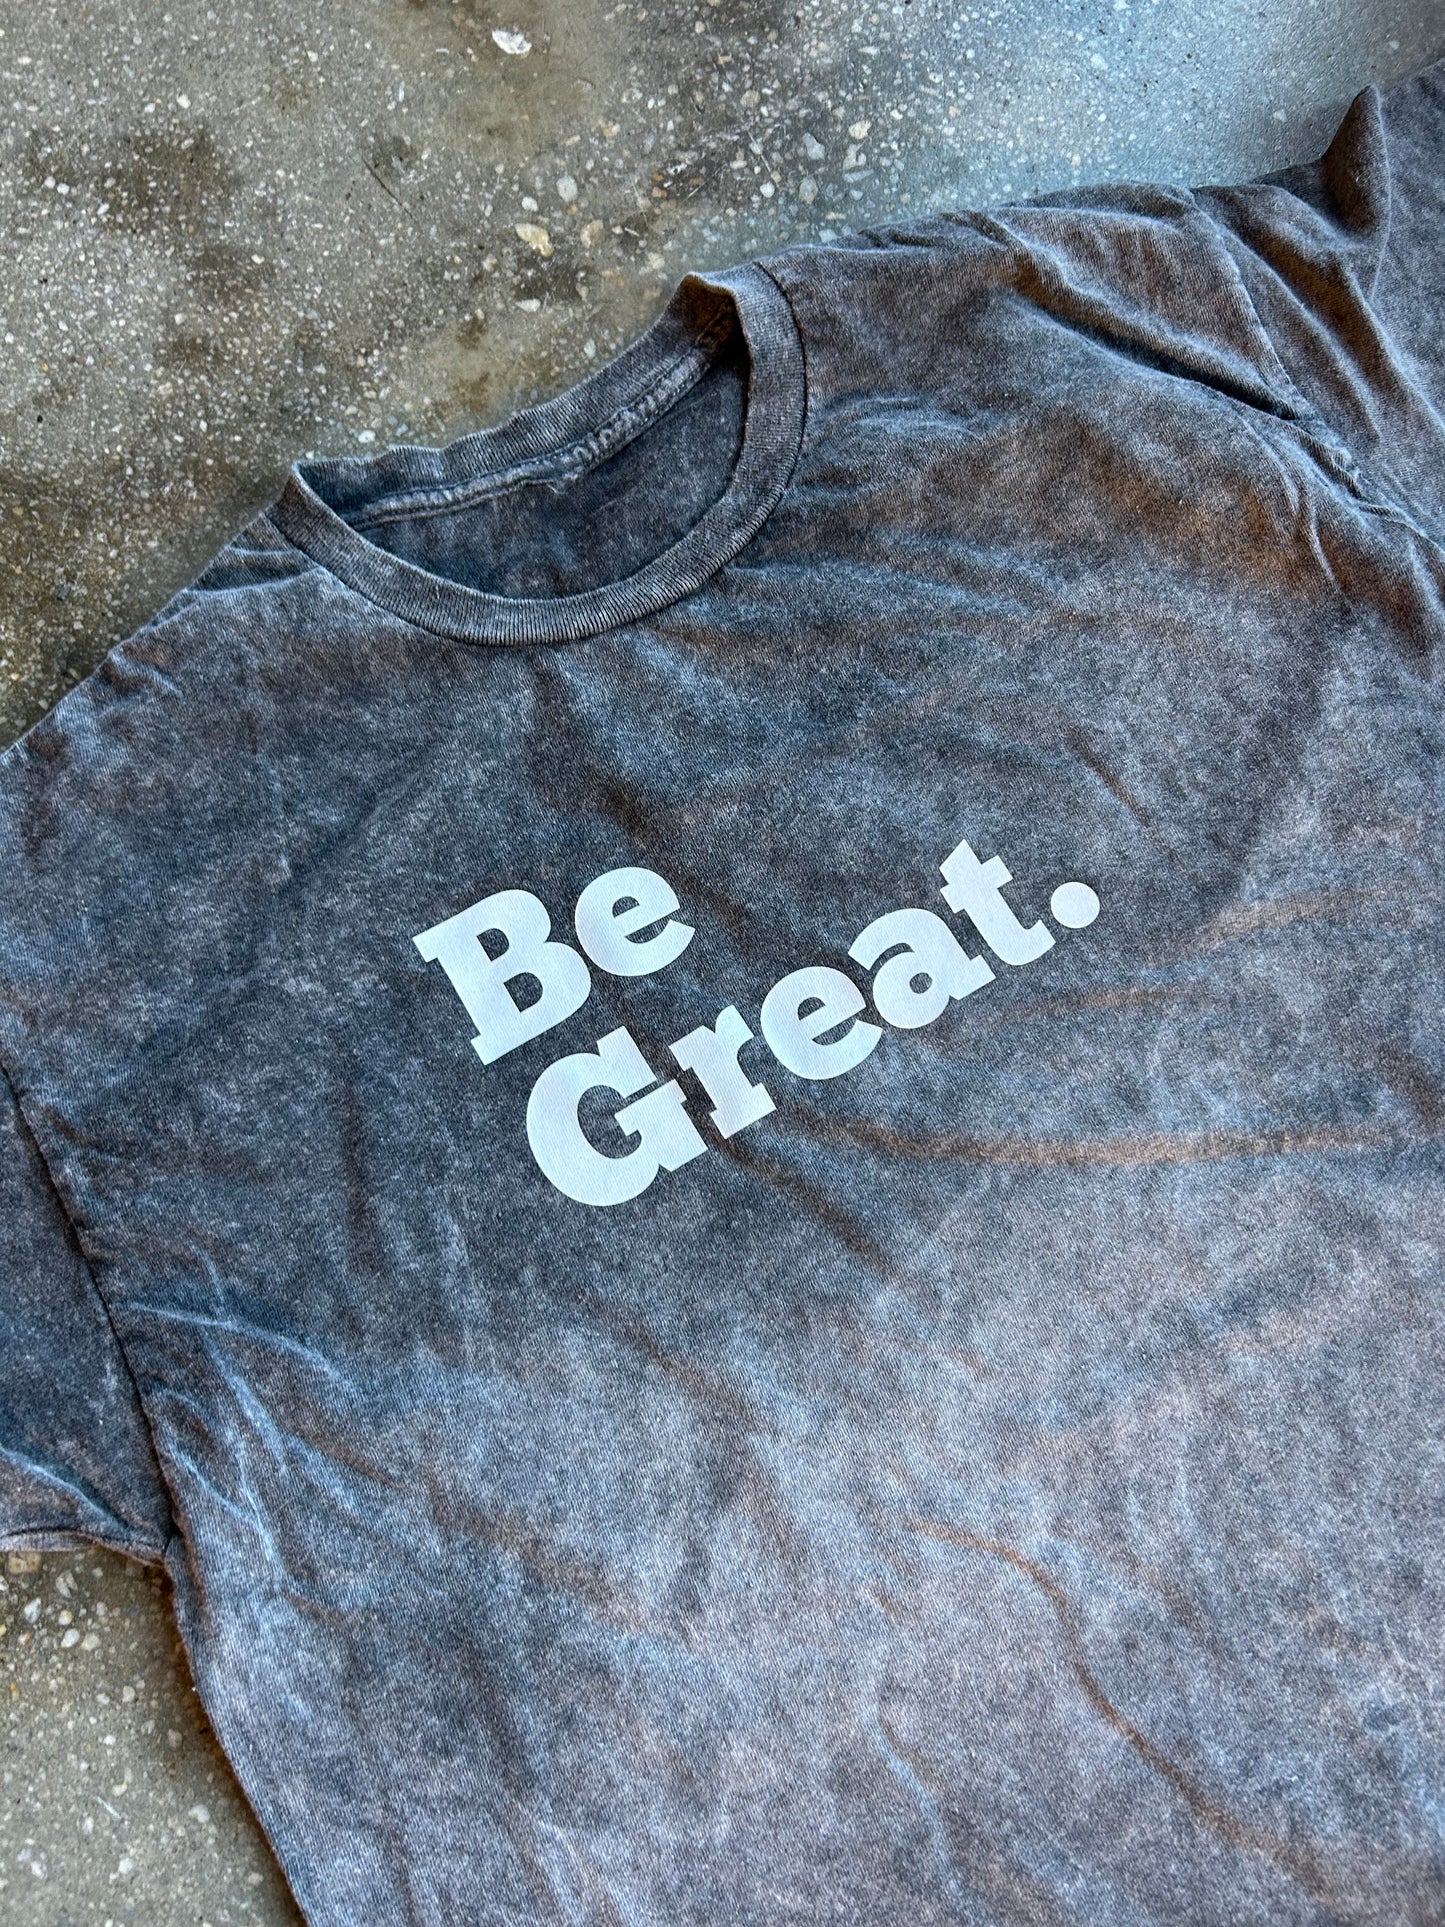 Be Great (Acid Wash) Adult Box T-Shirt